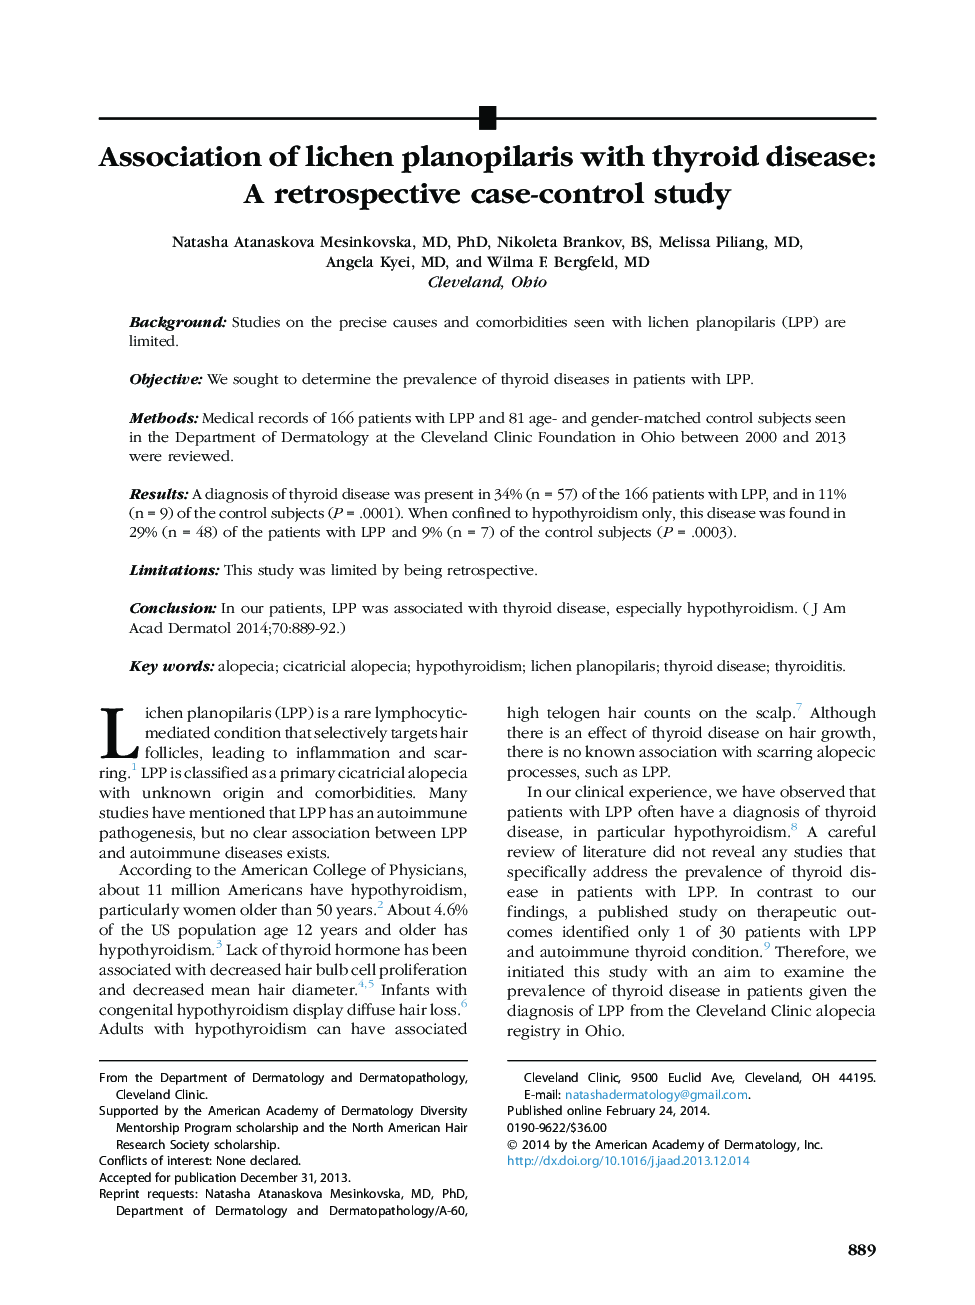 Association of lichen planopilaris with thyroid disease: A retrospective case-control study